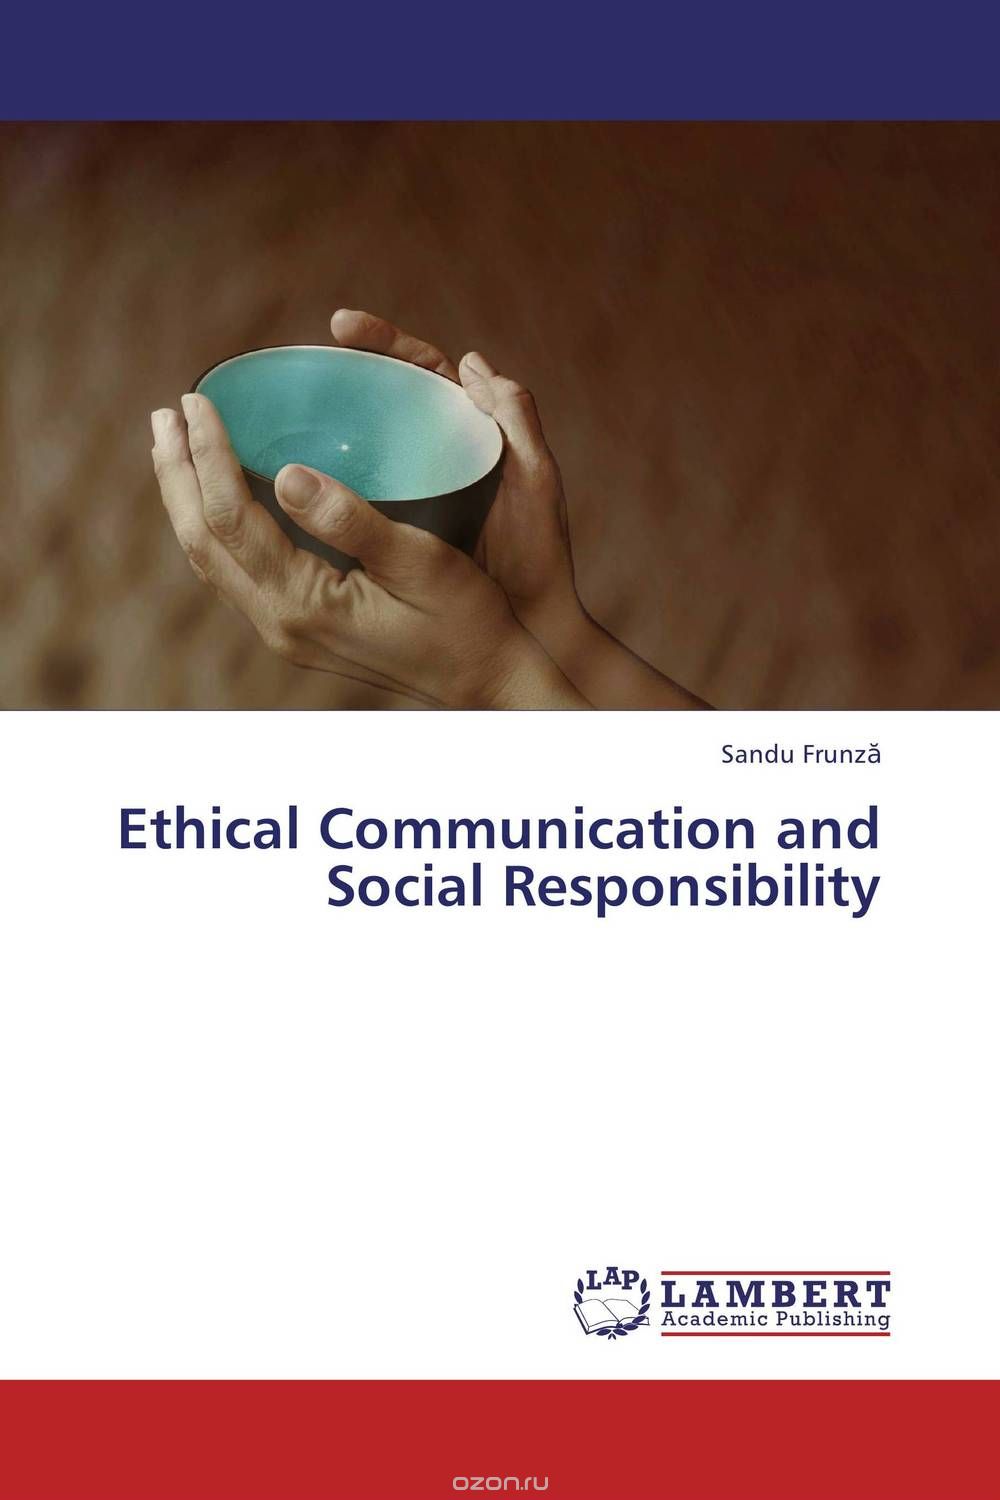 Скачать книгу "Ethical Communication and Social Responsibility"